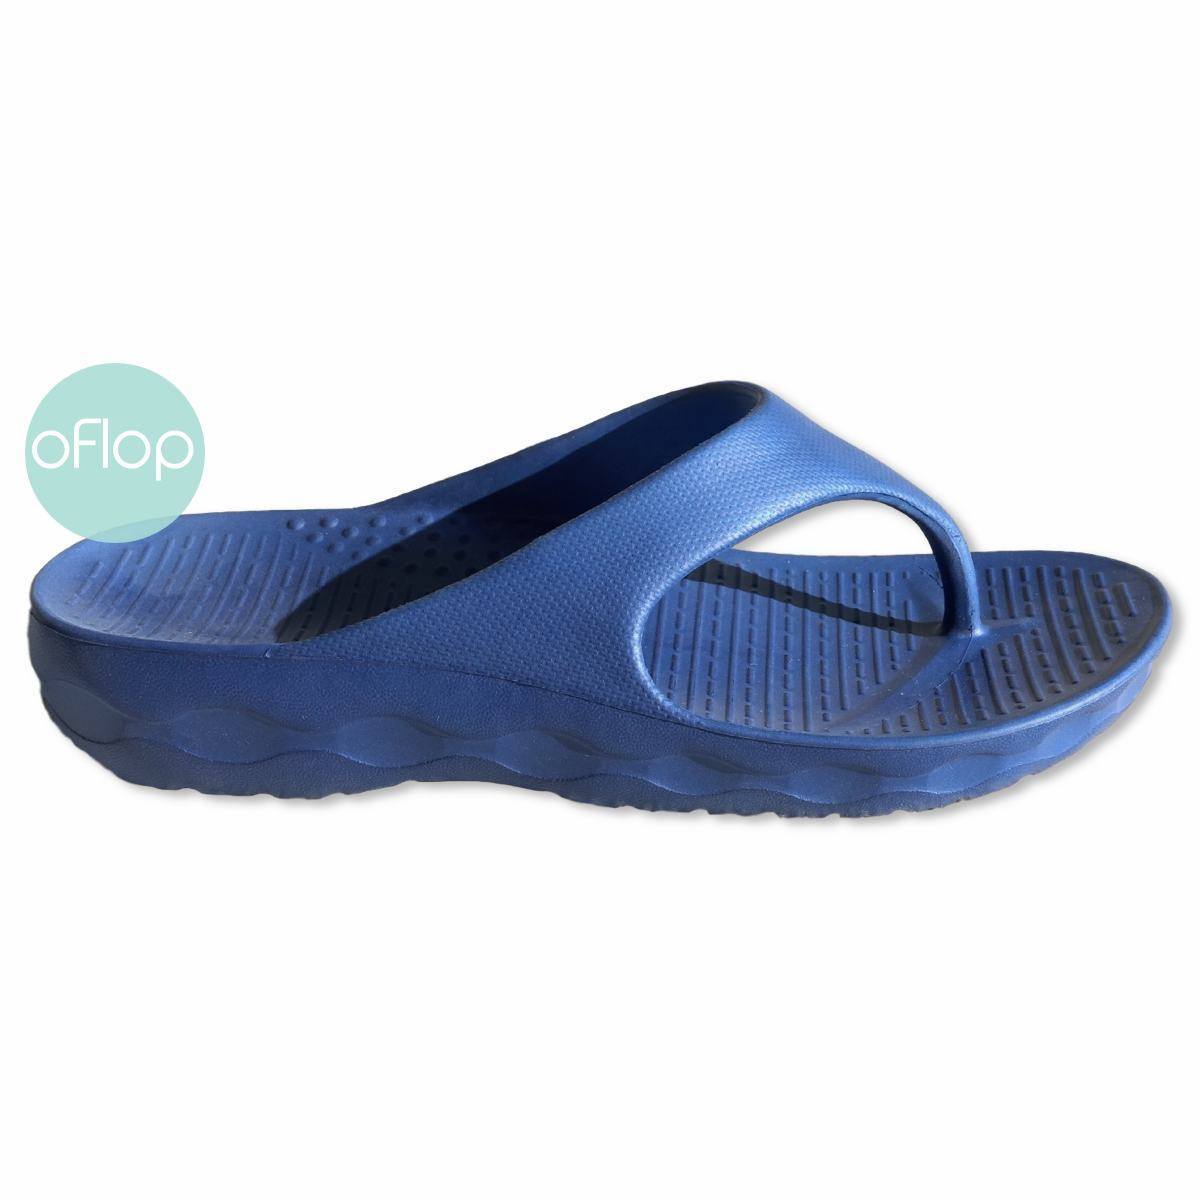 Sandals - Blue Flip - Pali Hawaii Thong Sandals